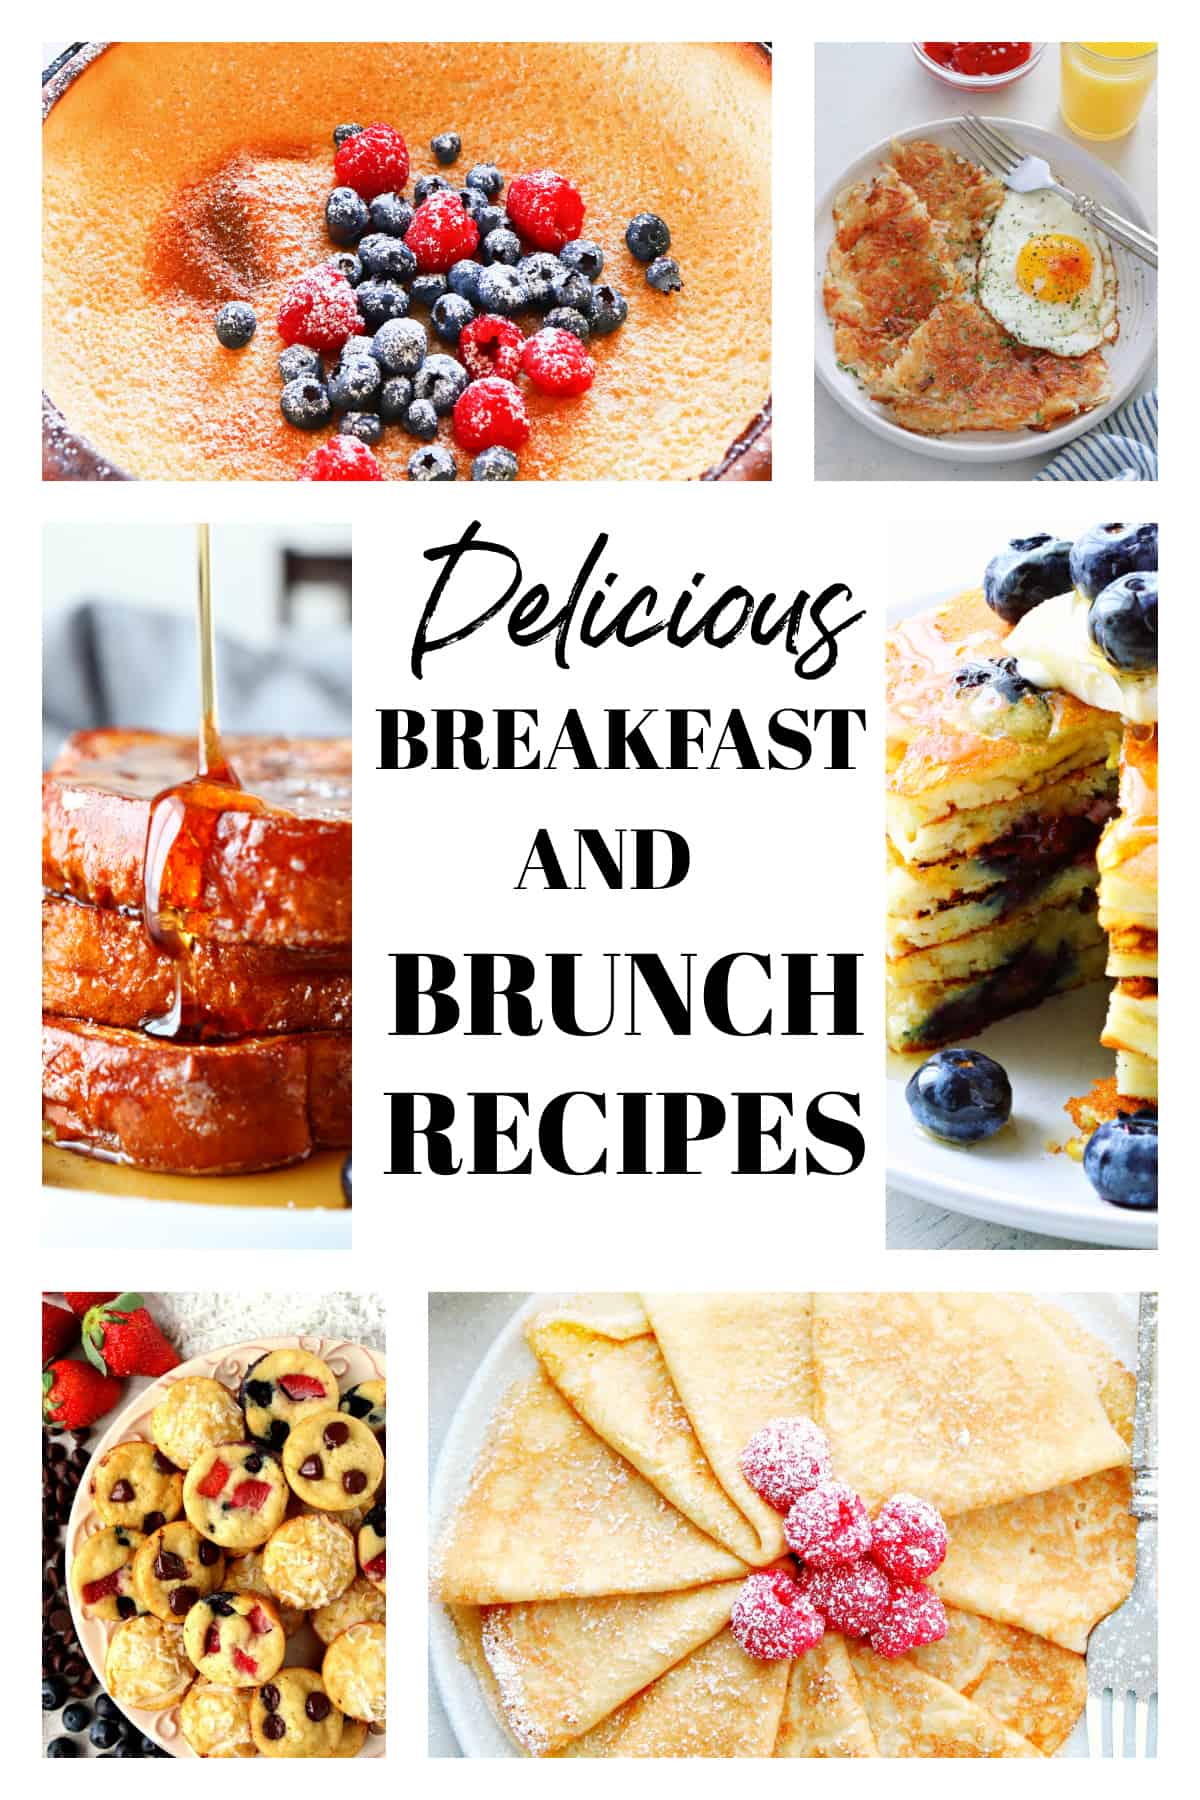 Breakfast recipes summarize Delicious Brunch Recipes